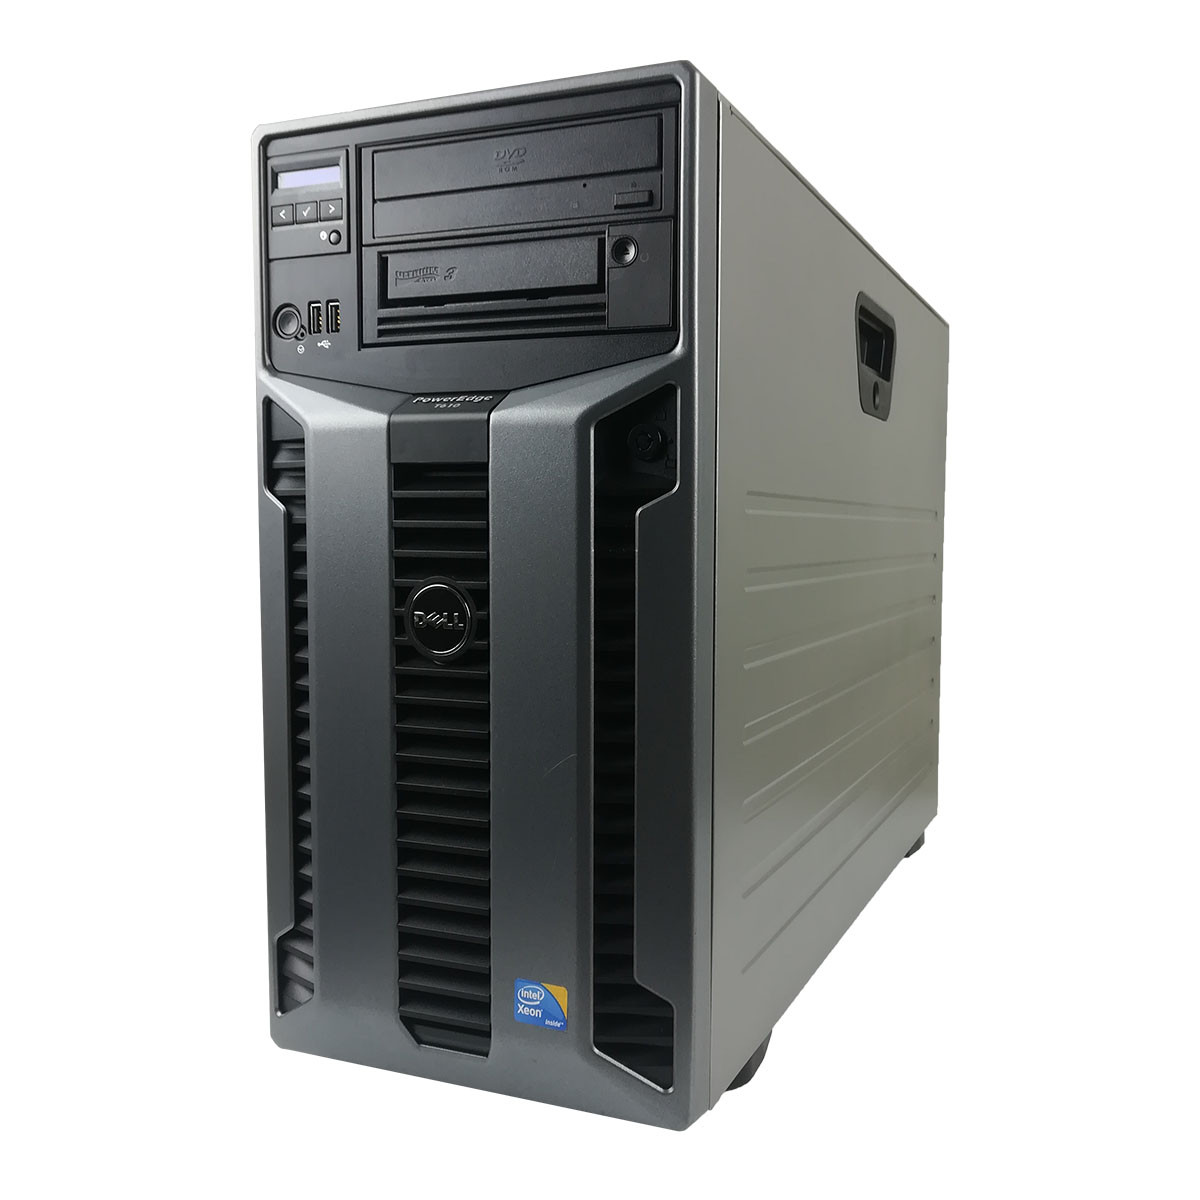 Server Dell PowerEdge T610 Tower, 2 x Intel Xeon Hexa Core X5650 2.66GHz - 3.06GHz, 16GB DDR3-ECC, Raid Perc 6i, 2 x 1TB HDD SATA, DVD-ROM, Idrac 6 Enterprise, 2 PSU Hot Swap